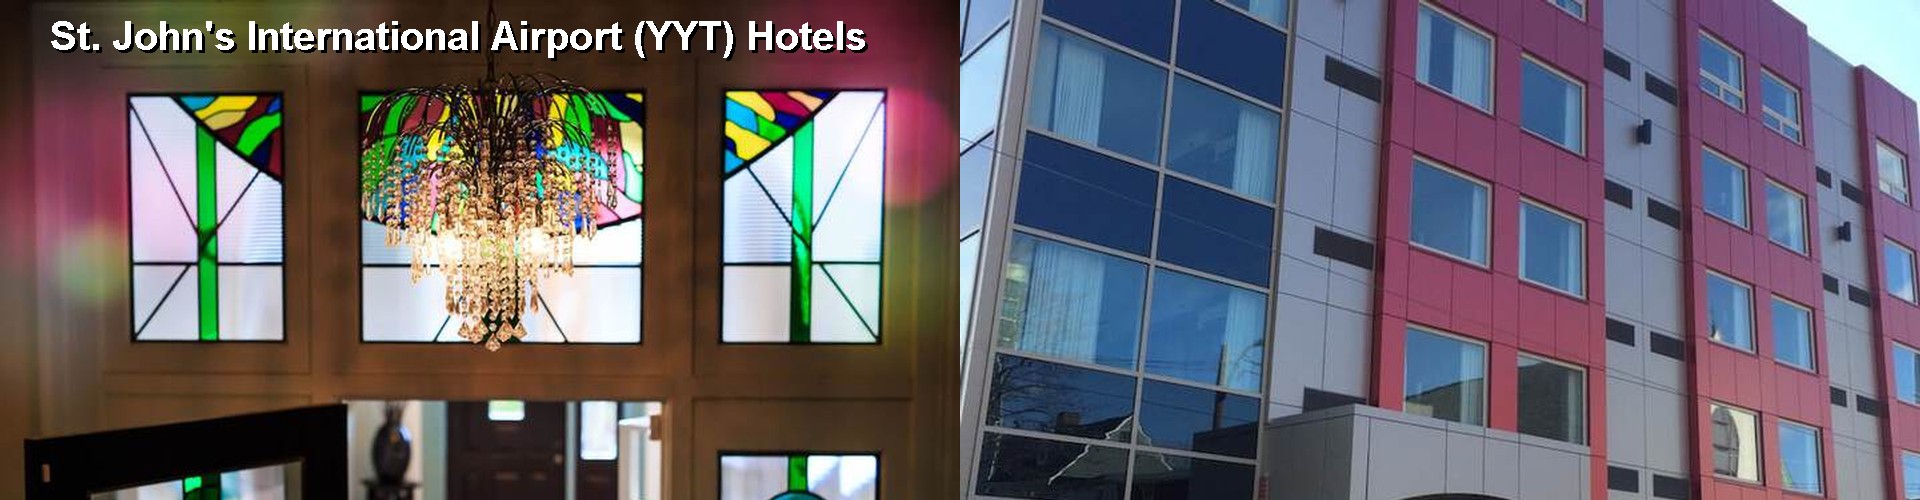 5 Best Hotels near St. John's International Airport (YYT)